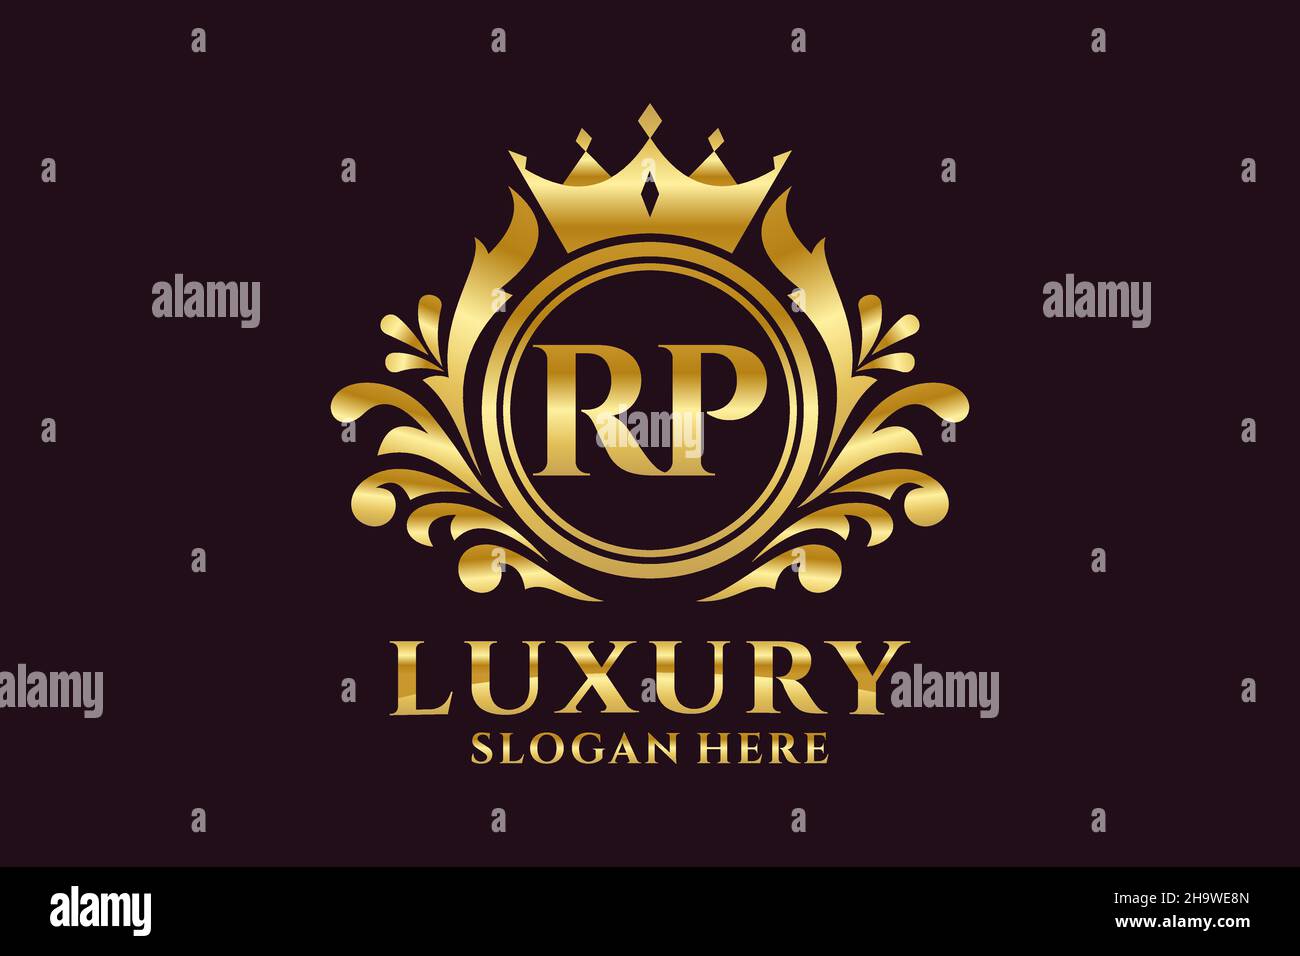 RP Letter Royal Luxury Logo-Vorlage in Vektorgrafik für luxuriöse Branding-Projekte und andere Vektorgrafik. Stock Vektor